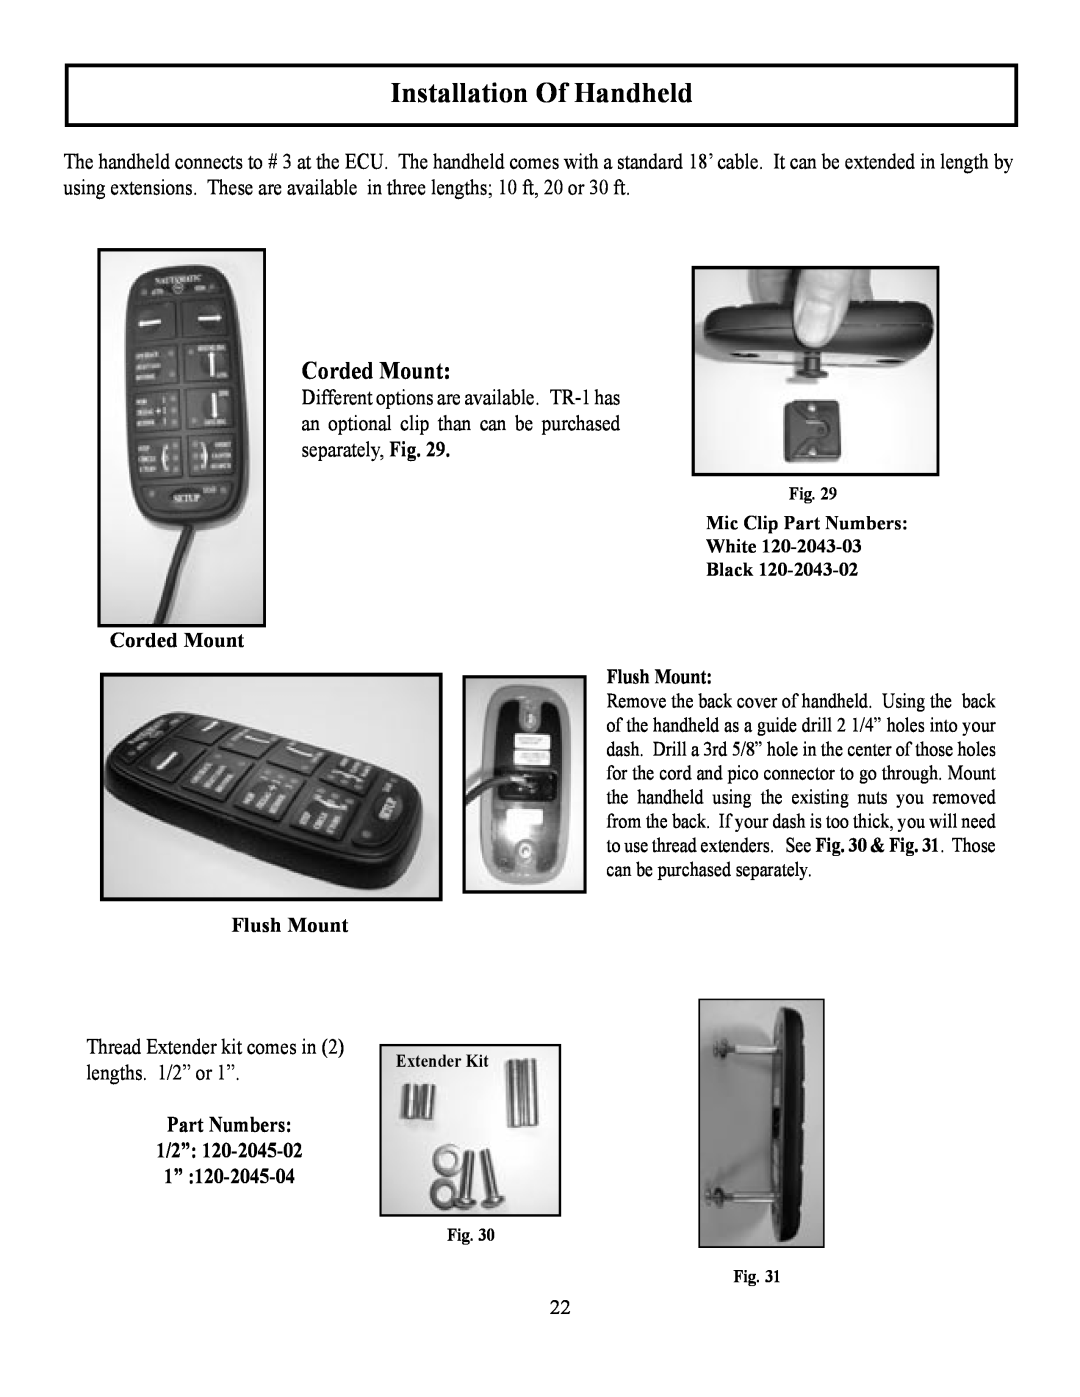 Garmin TR-1 manual Installation Of Handheld, Corded Mount 